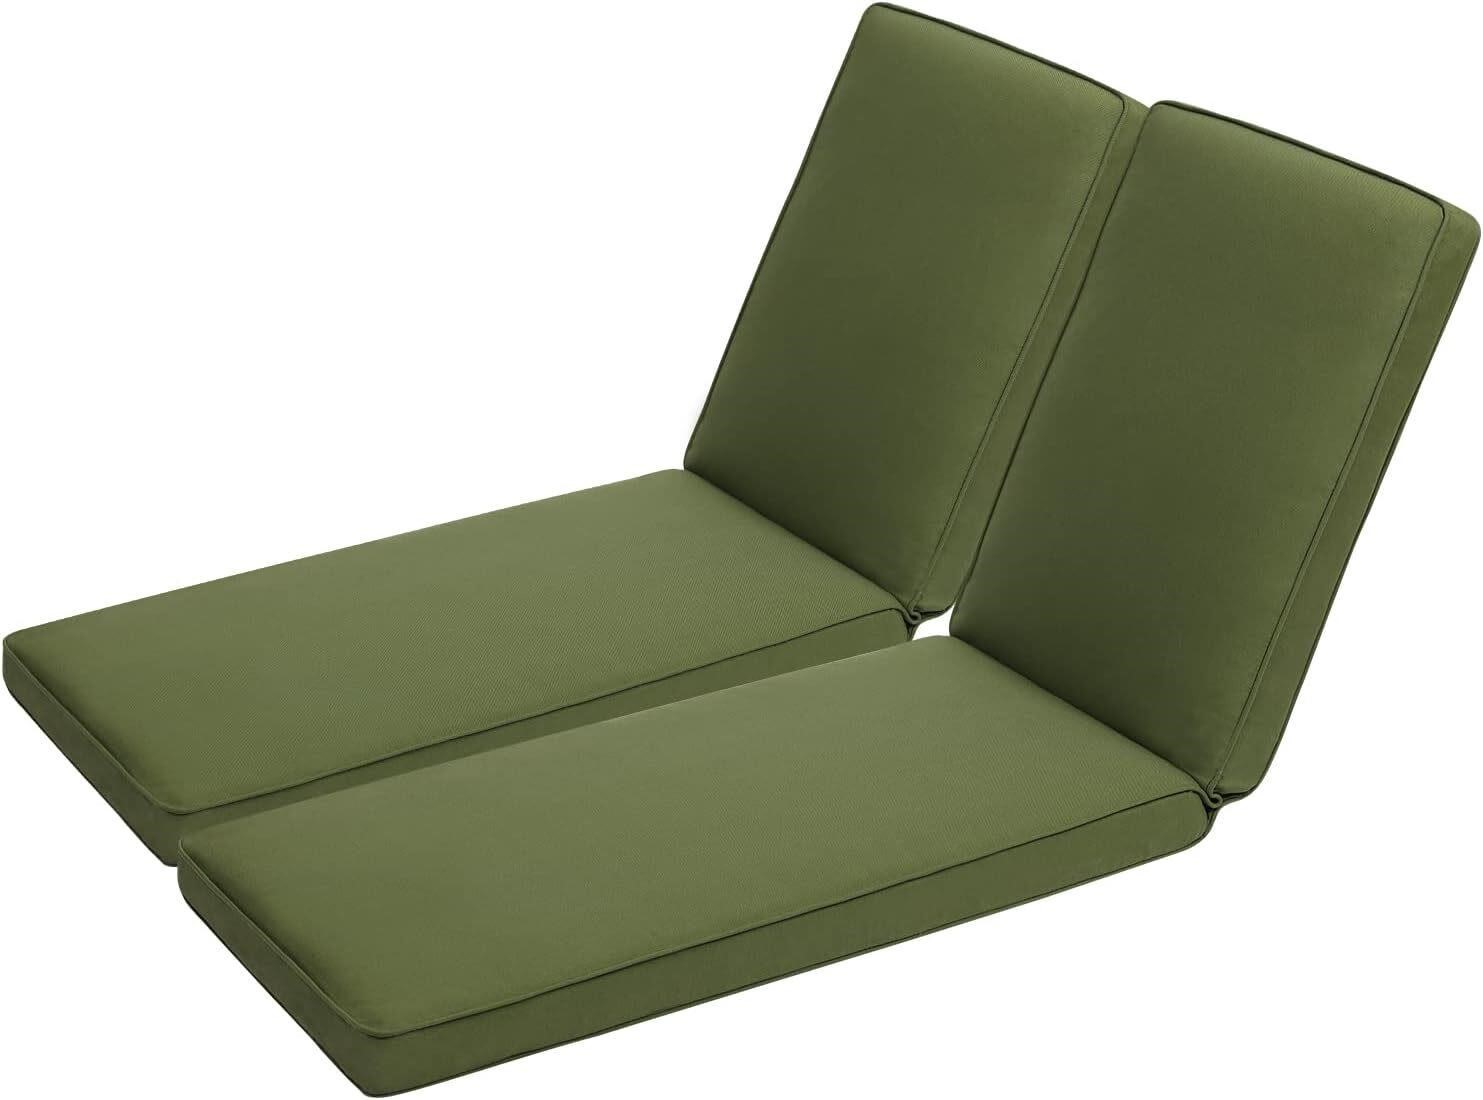 $140  2 Green BPS Lounger Cushions 72'Lx22'Wx3.5H